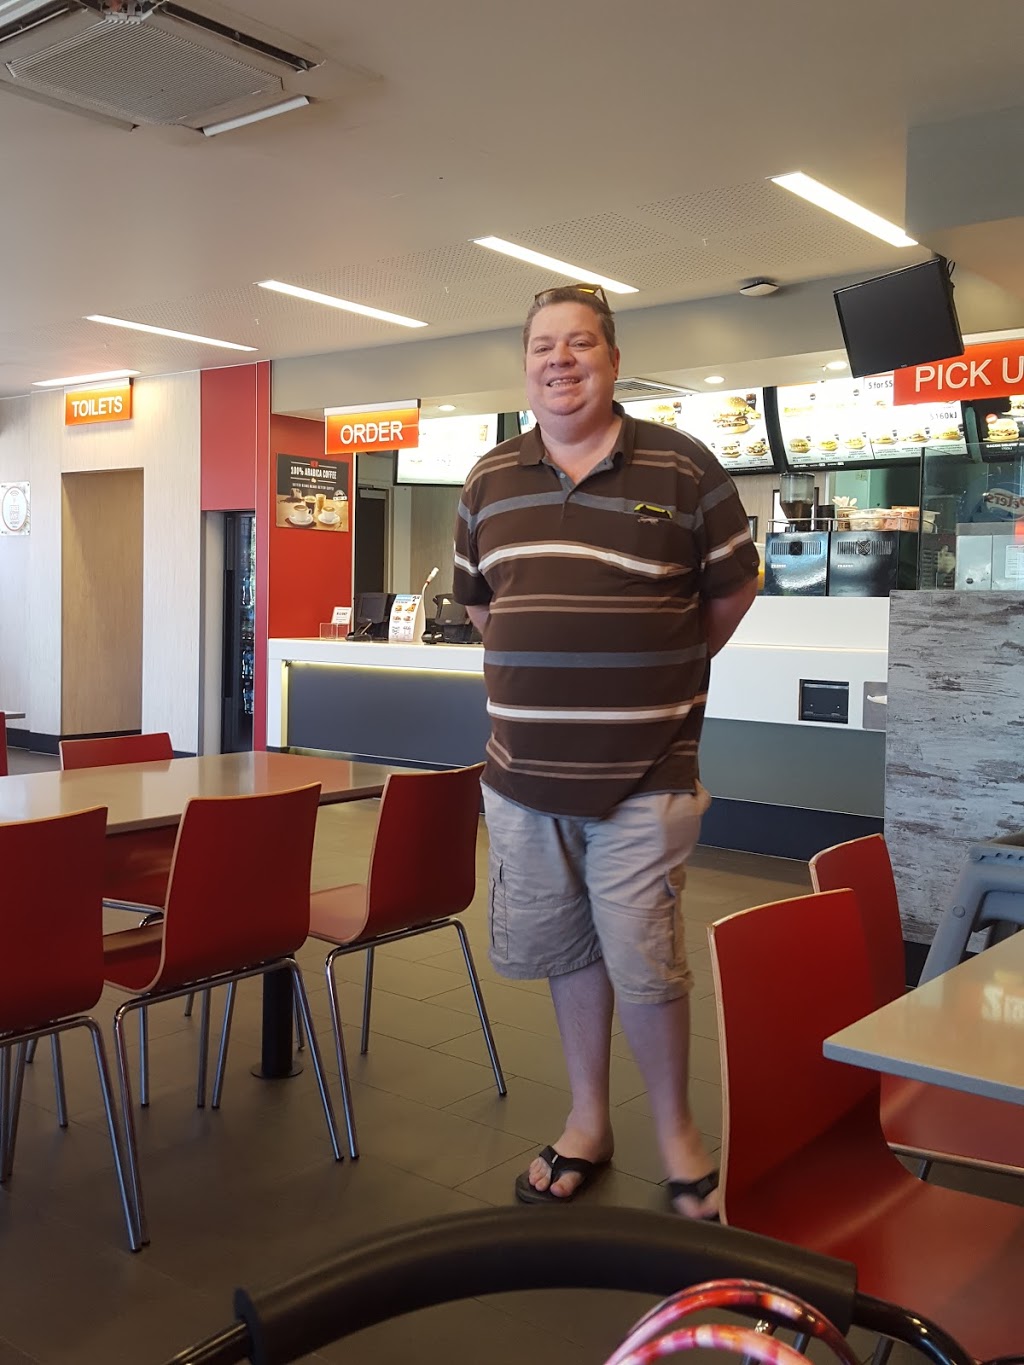 Hungry Jacks Burgers Yamanto | 444 Warwick Rd, Yamanto QLD 4305, Australia | Phone: (07) 3288 6346